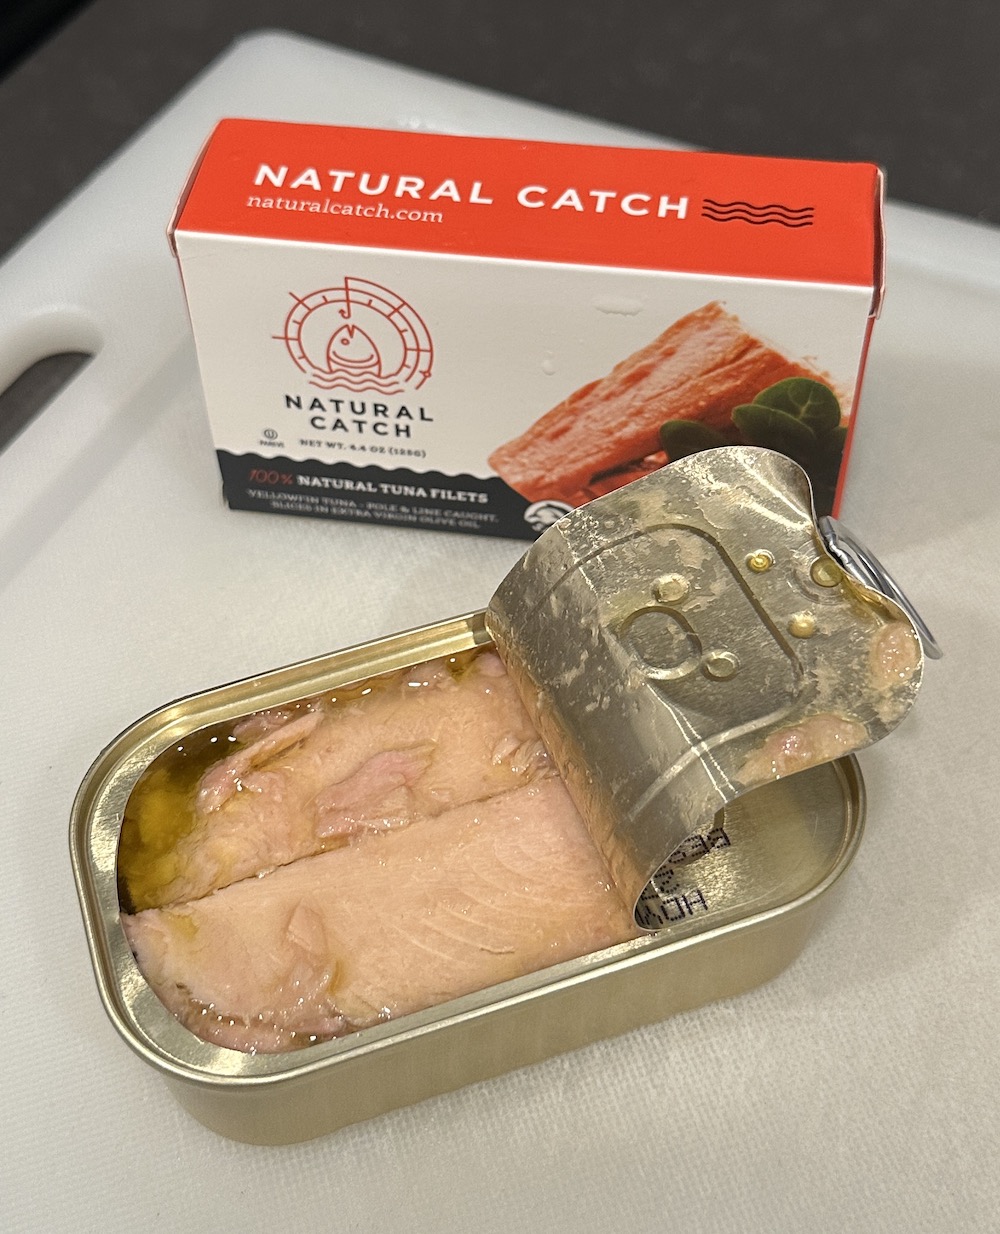 Natural Catch canned Tuna Steaks